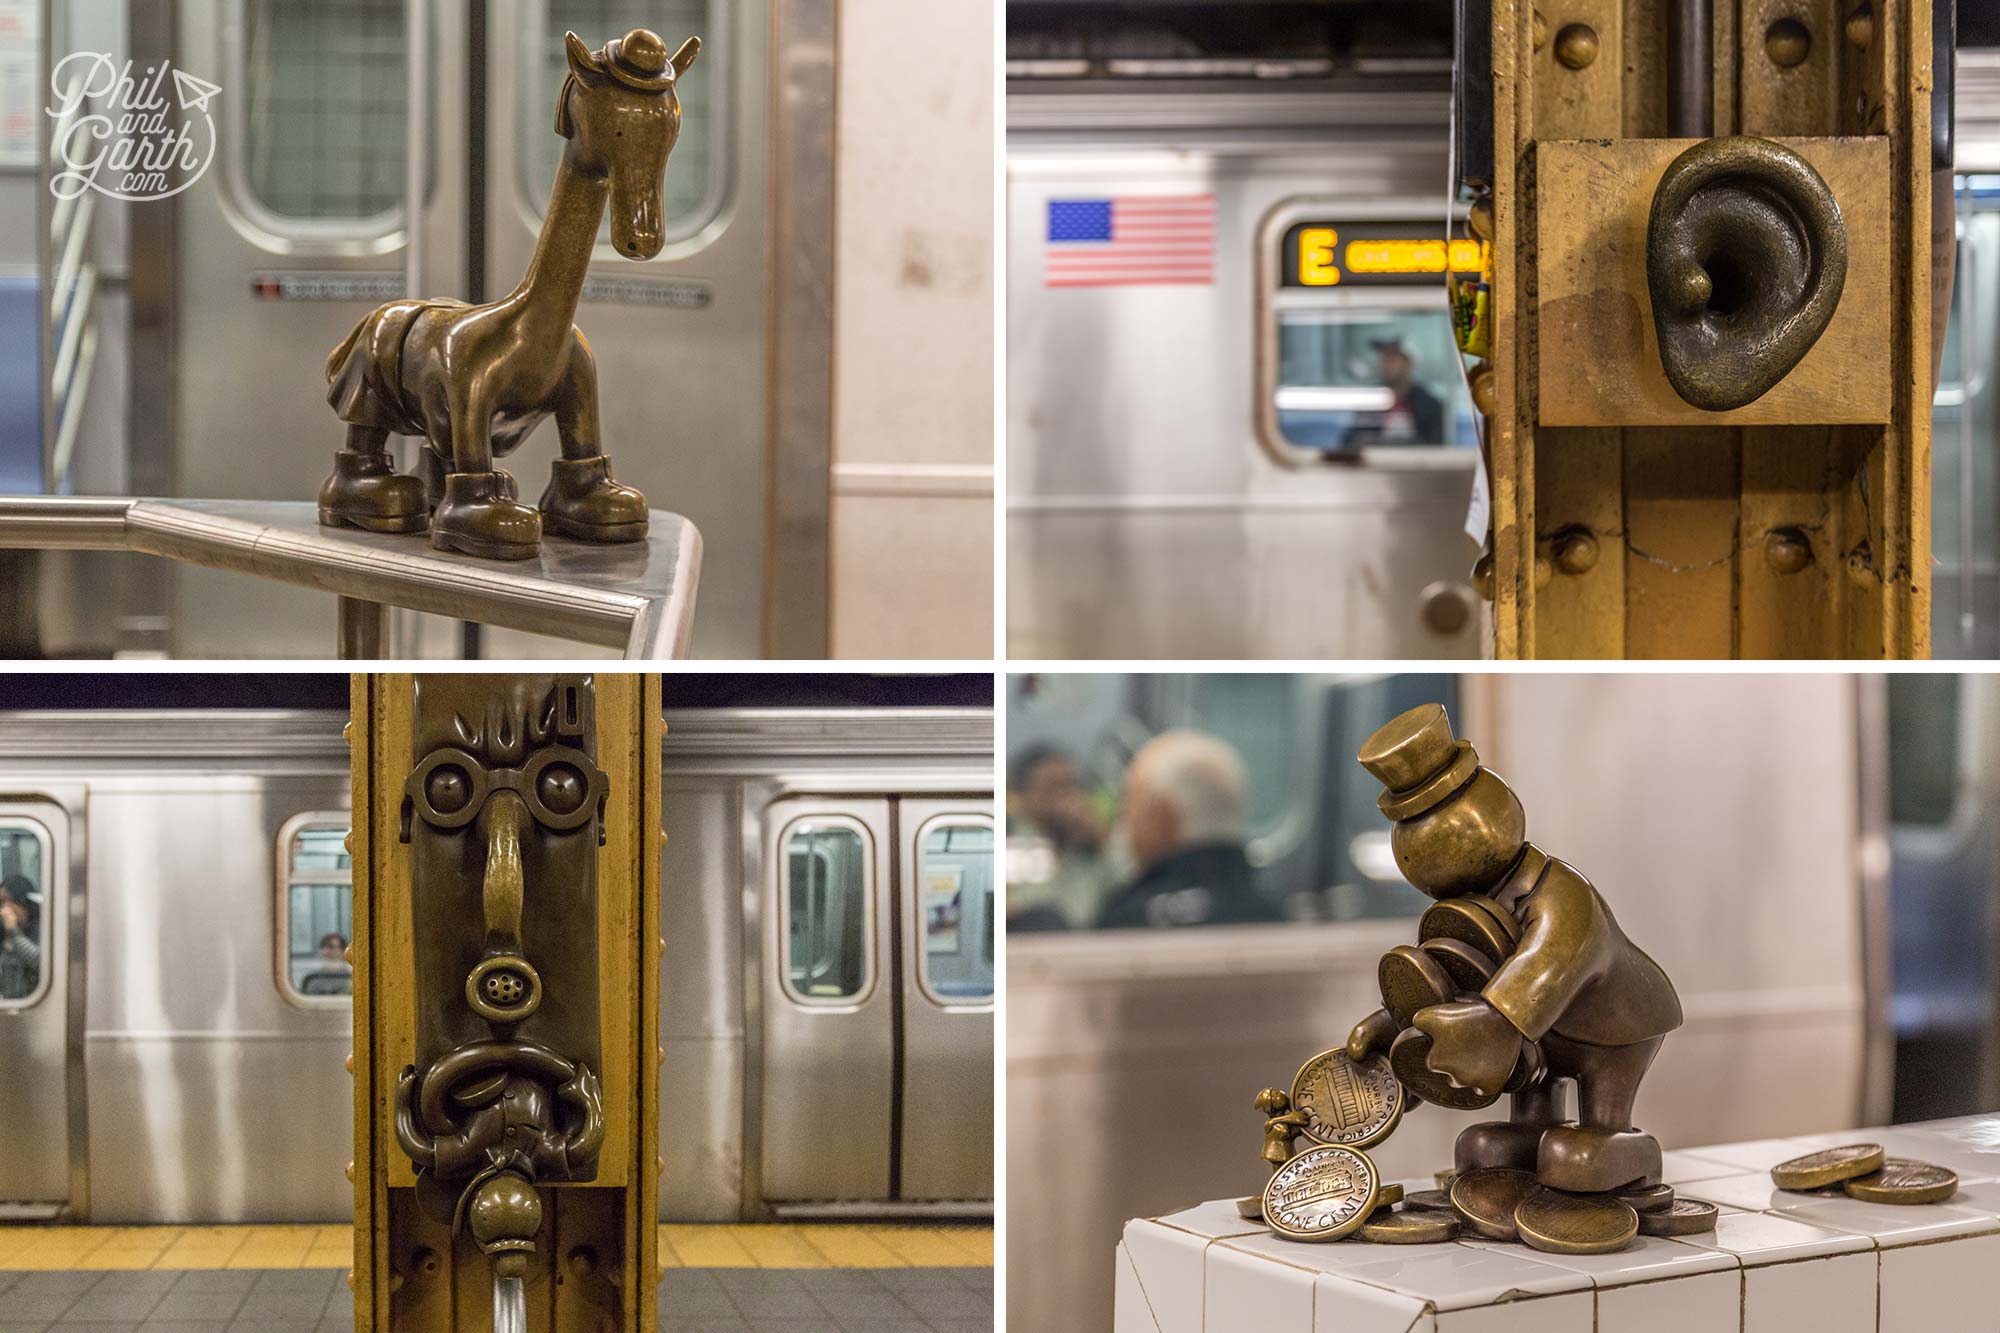 New York Subway art - 'Life Underground' by Tom Otterness